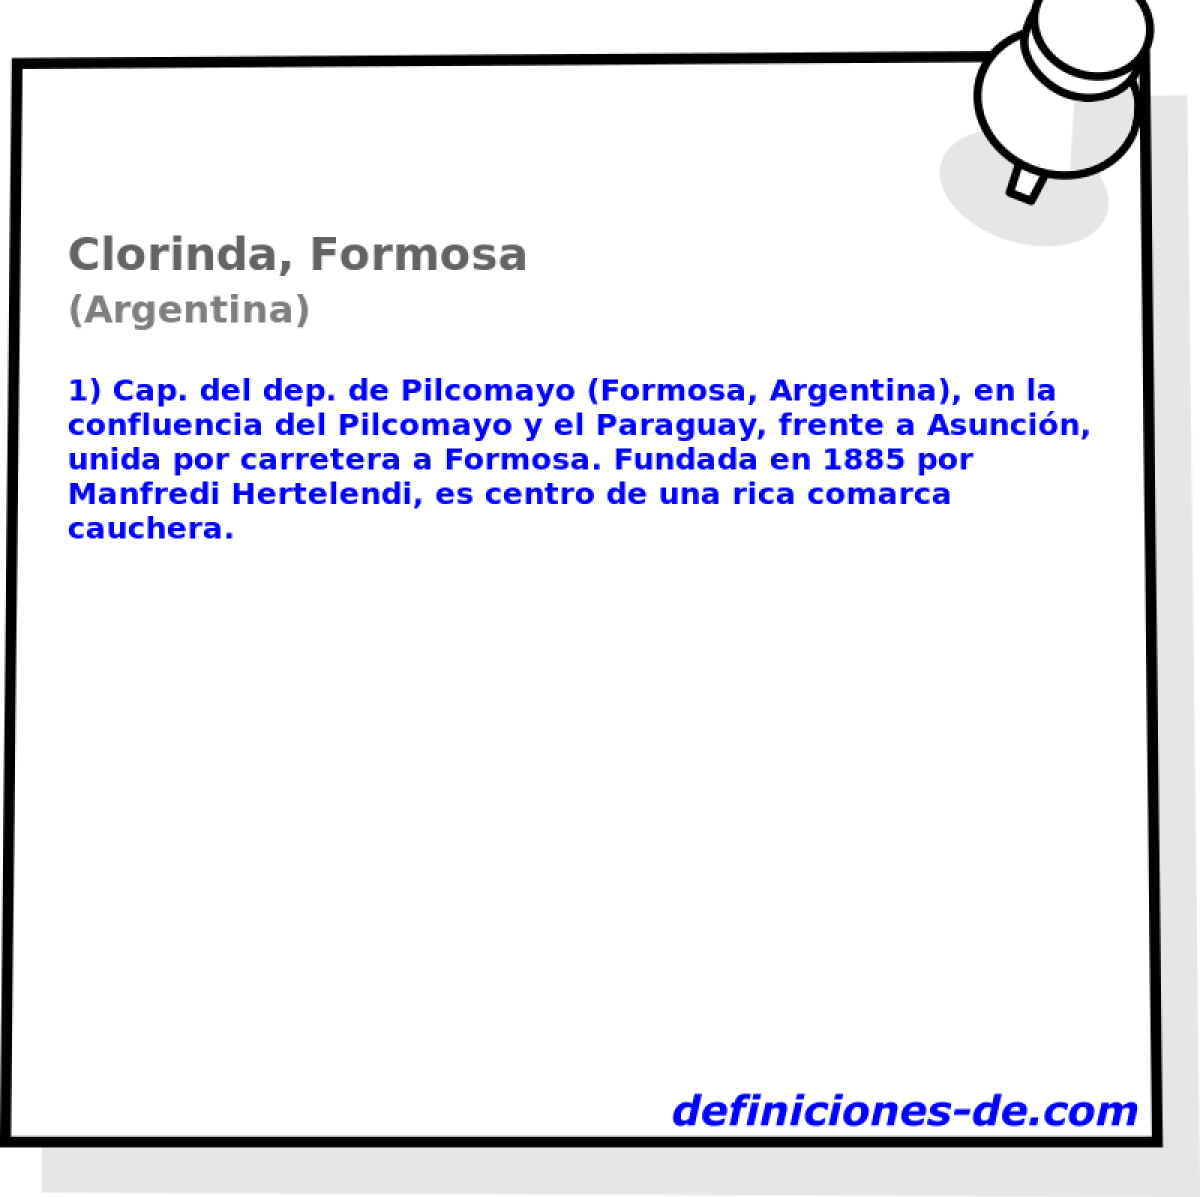 Clorinda, Formosa (Argentina)